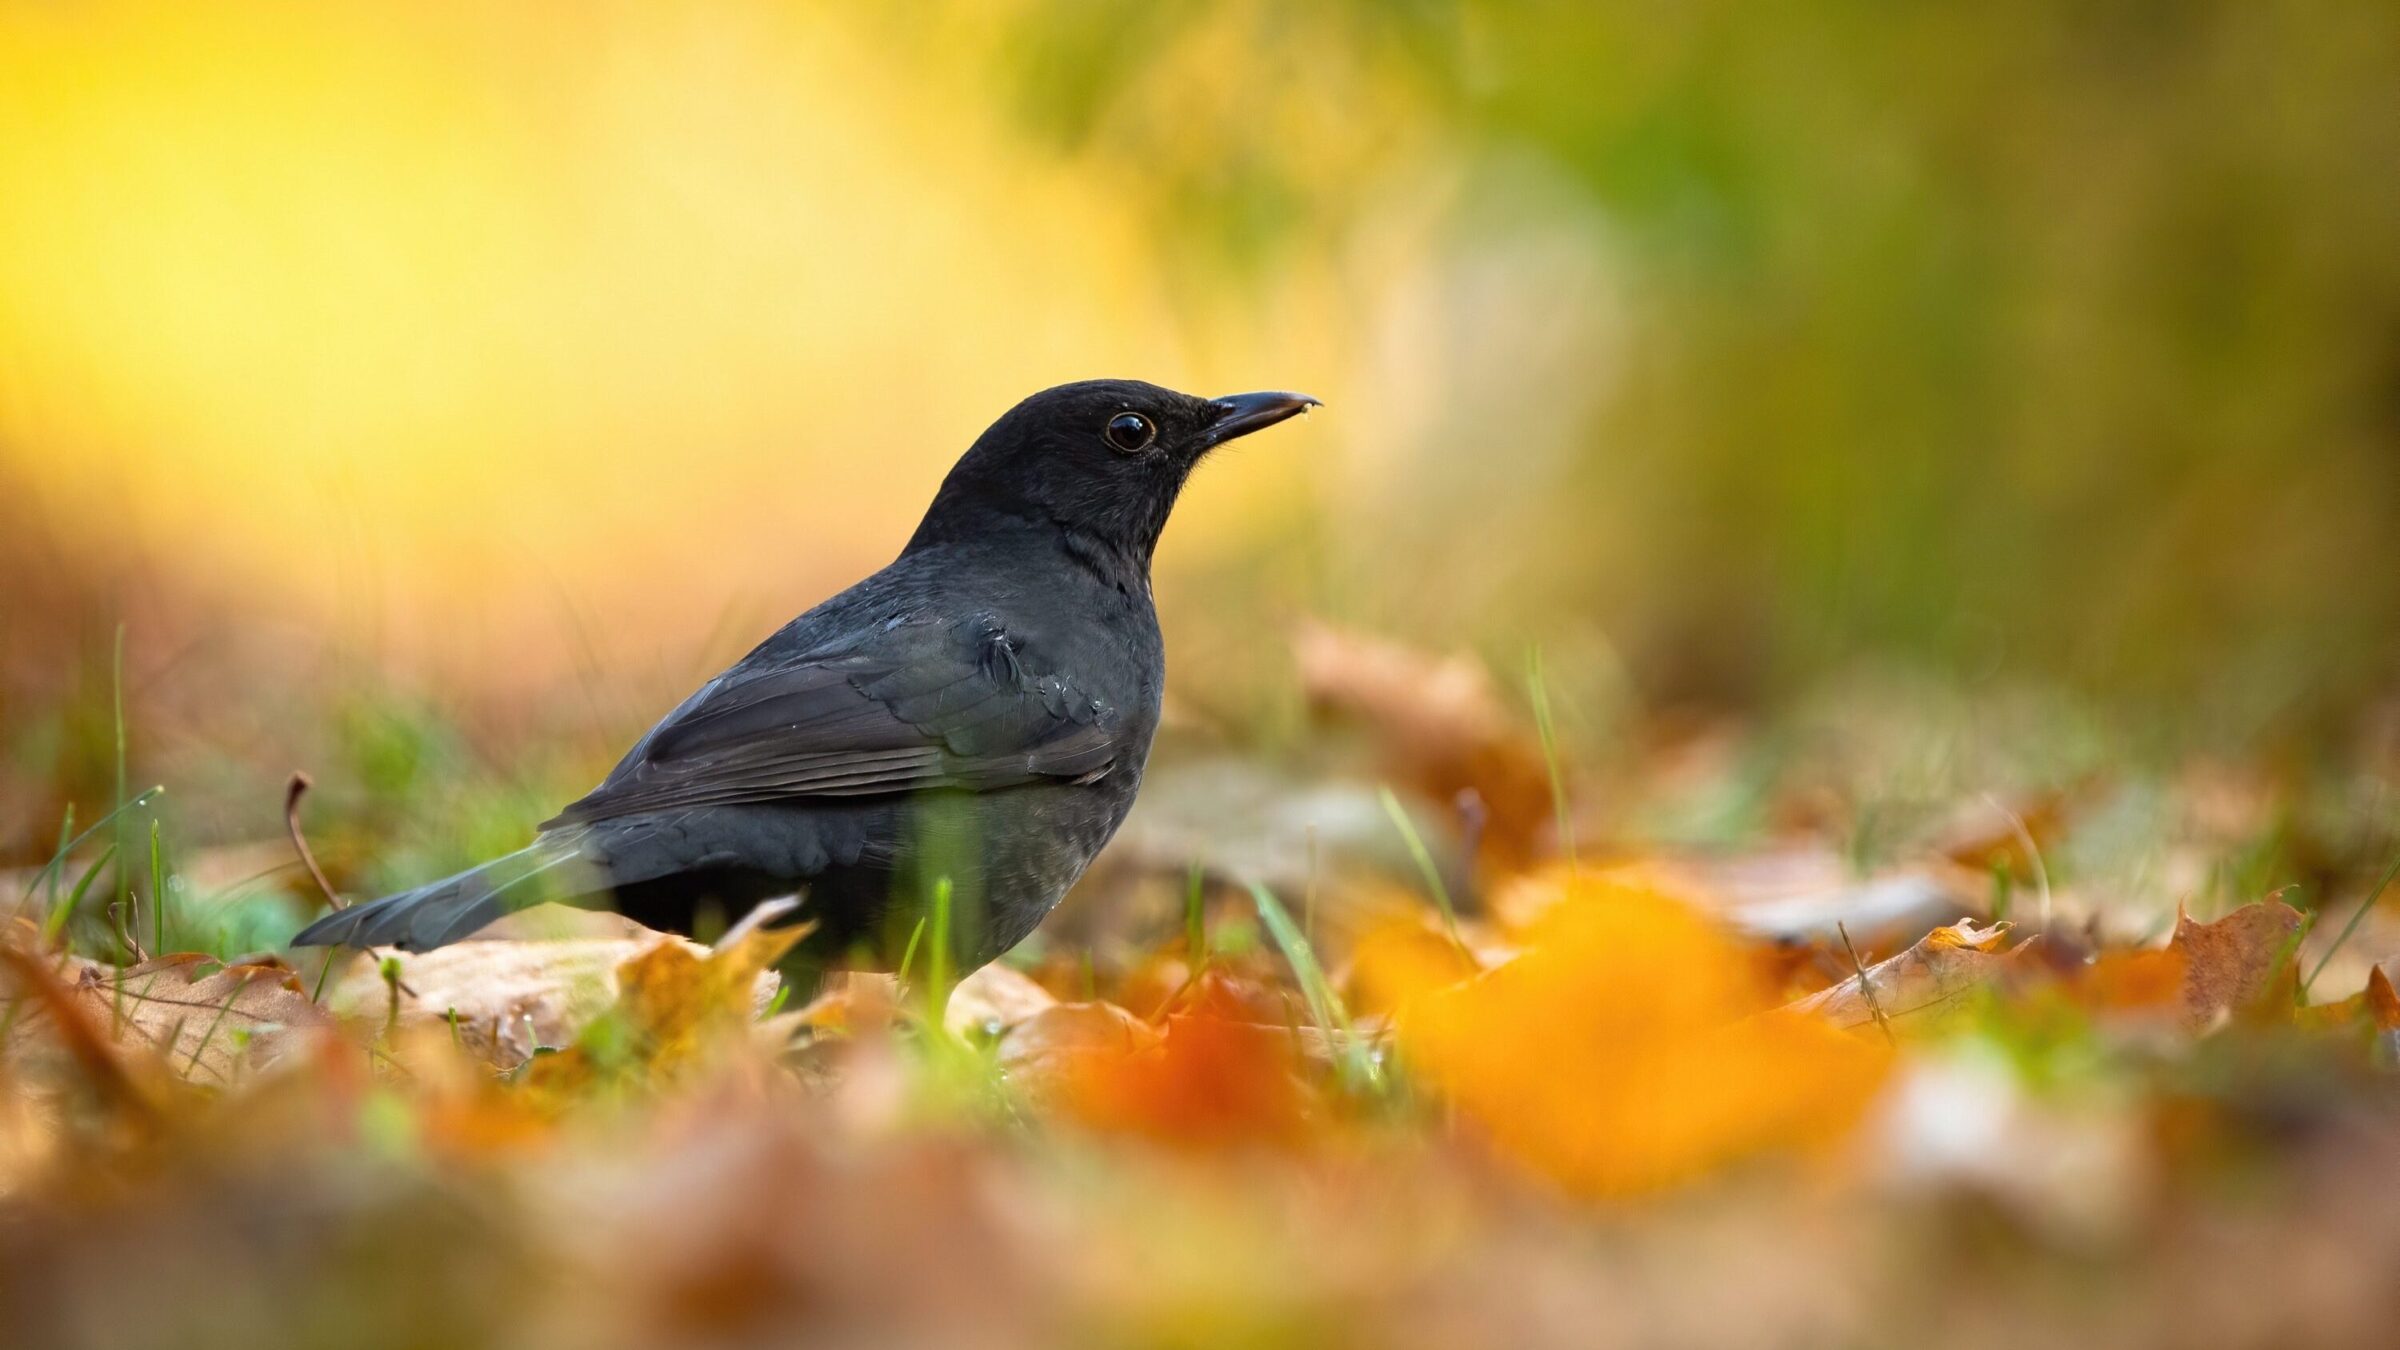 Small common blackbird sitting on the ground